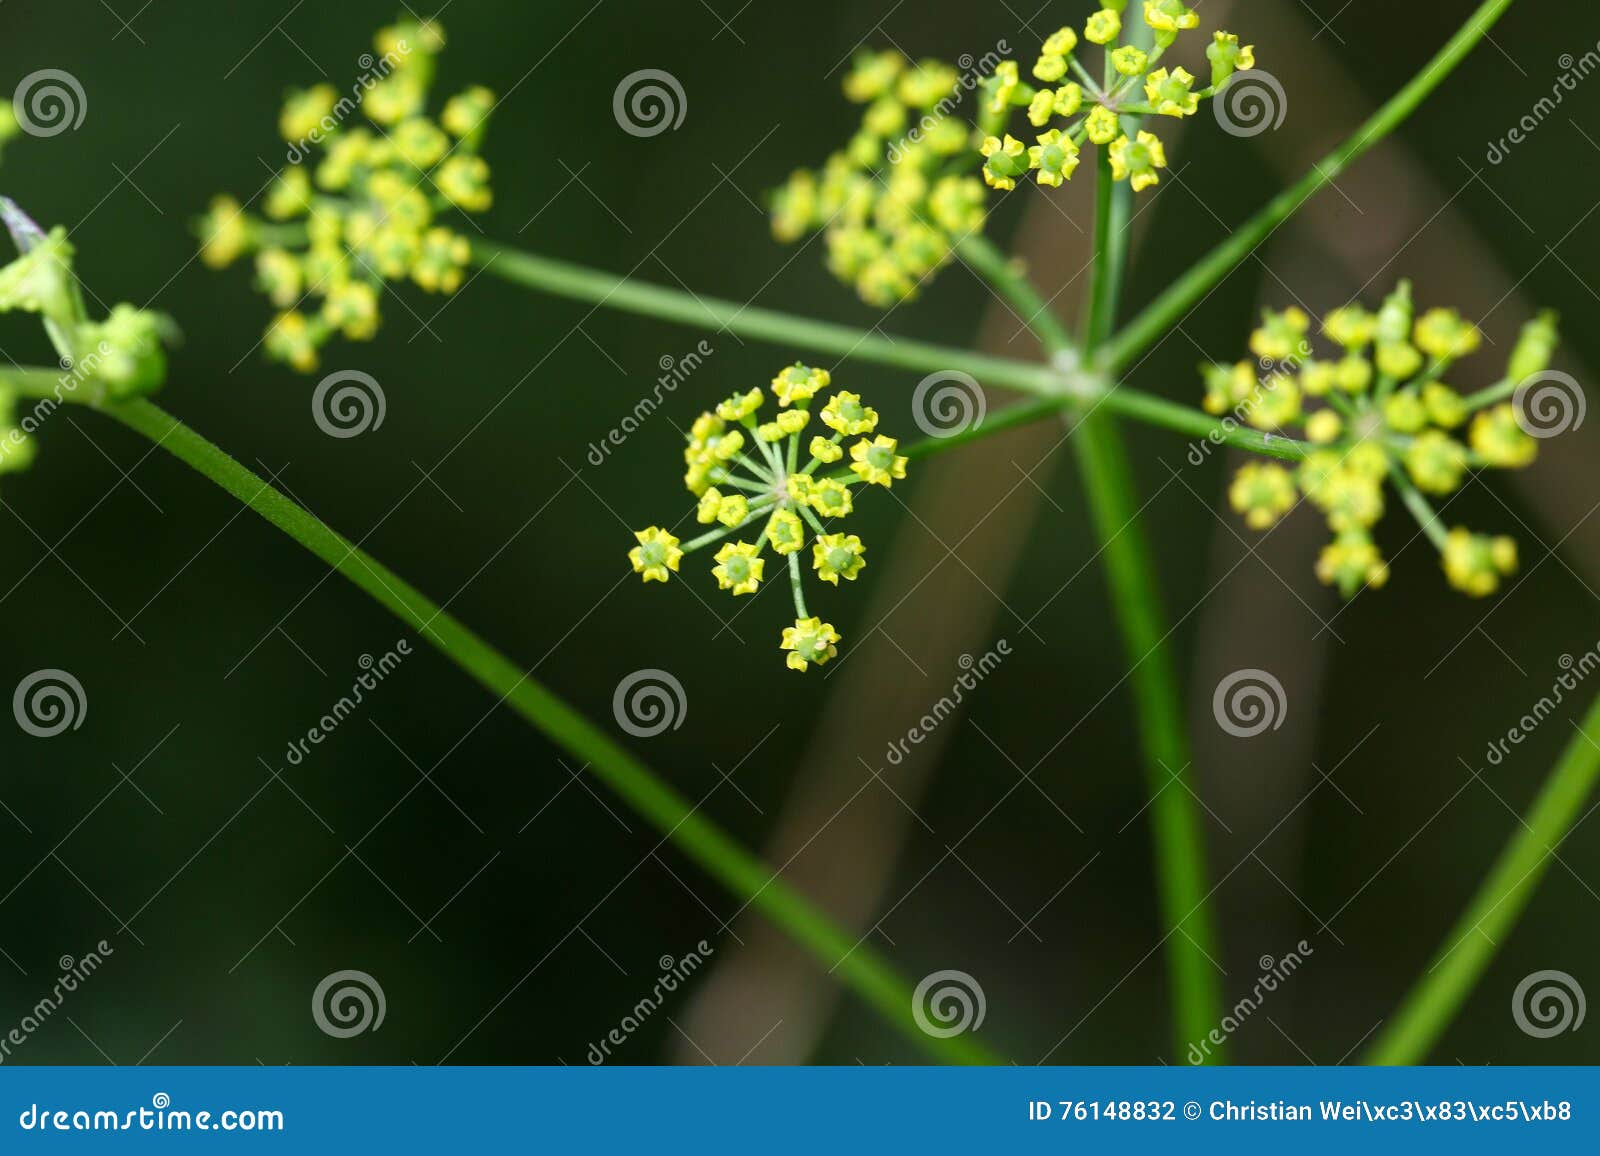 wild parsnip flower (pastinaca sativa)